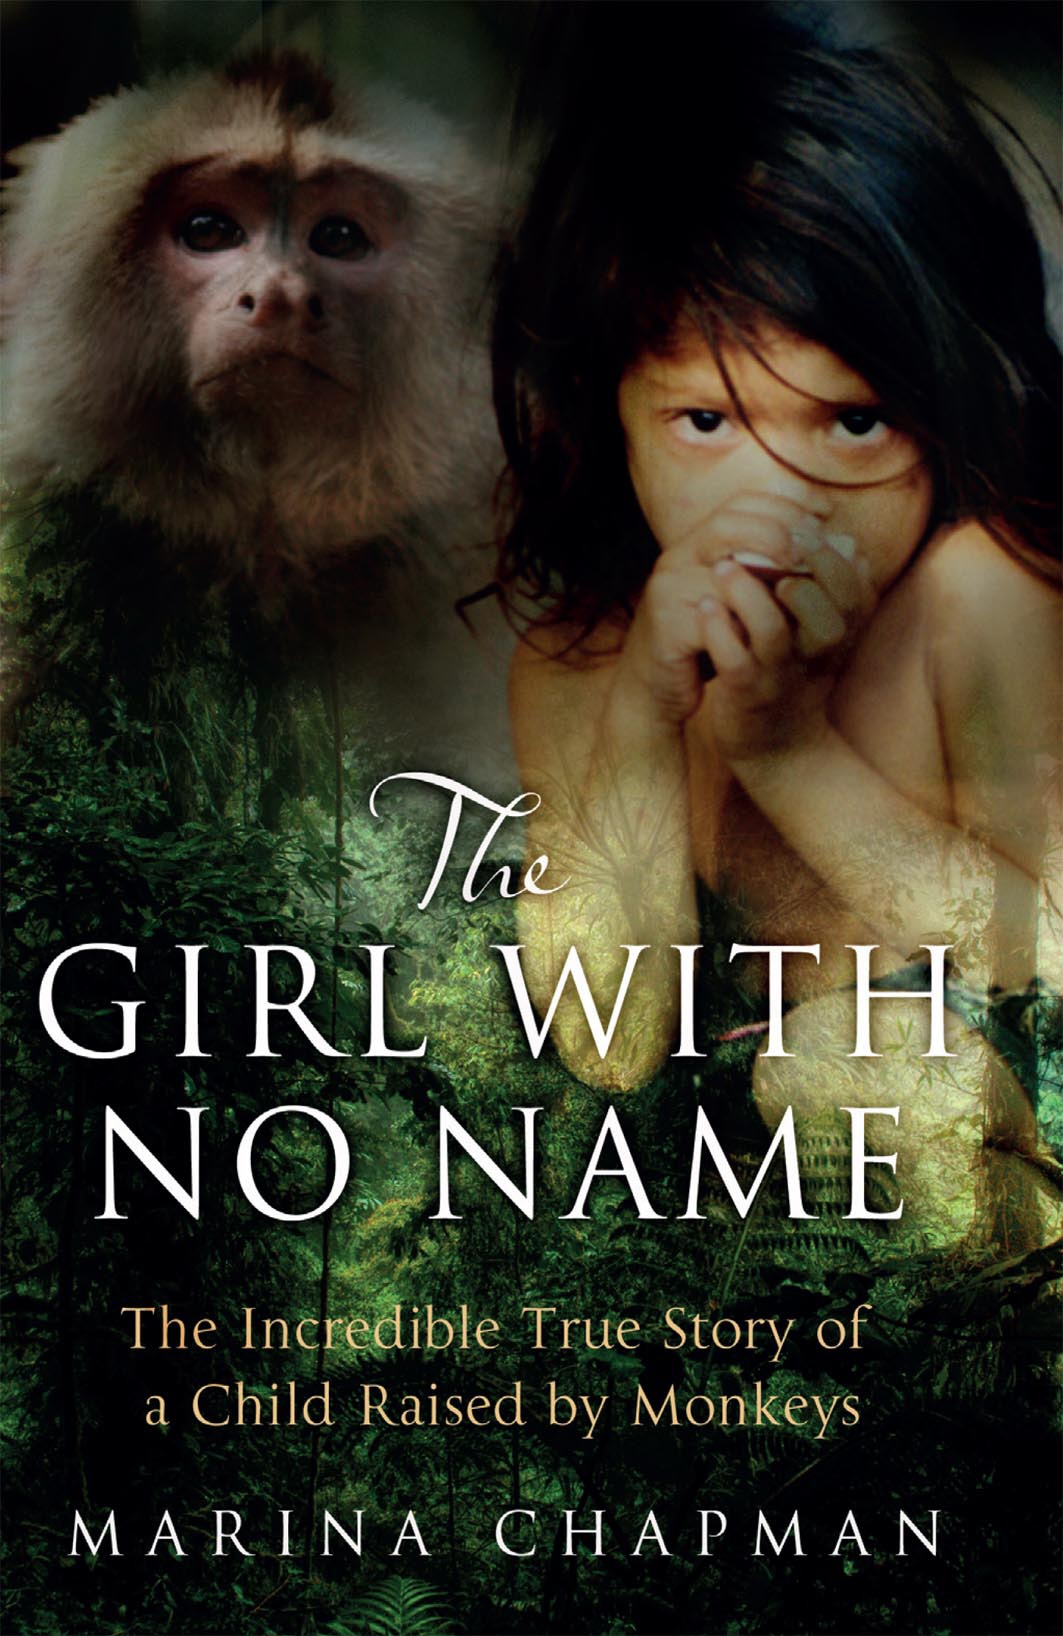 Book “The Girl with No Name” by Marina Chapman, Vanessa James — November 7, 2013